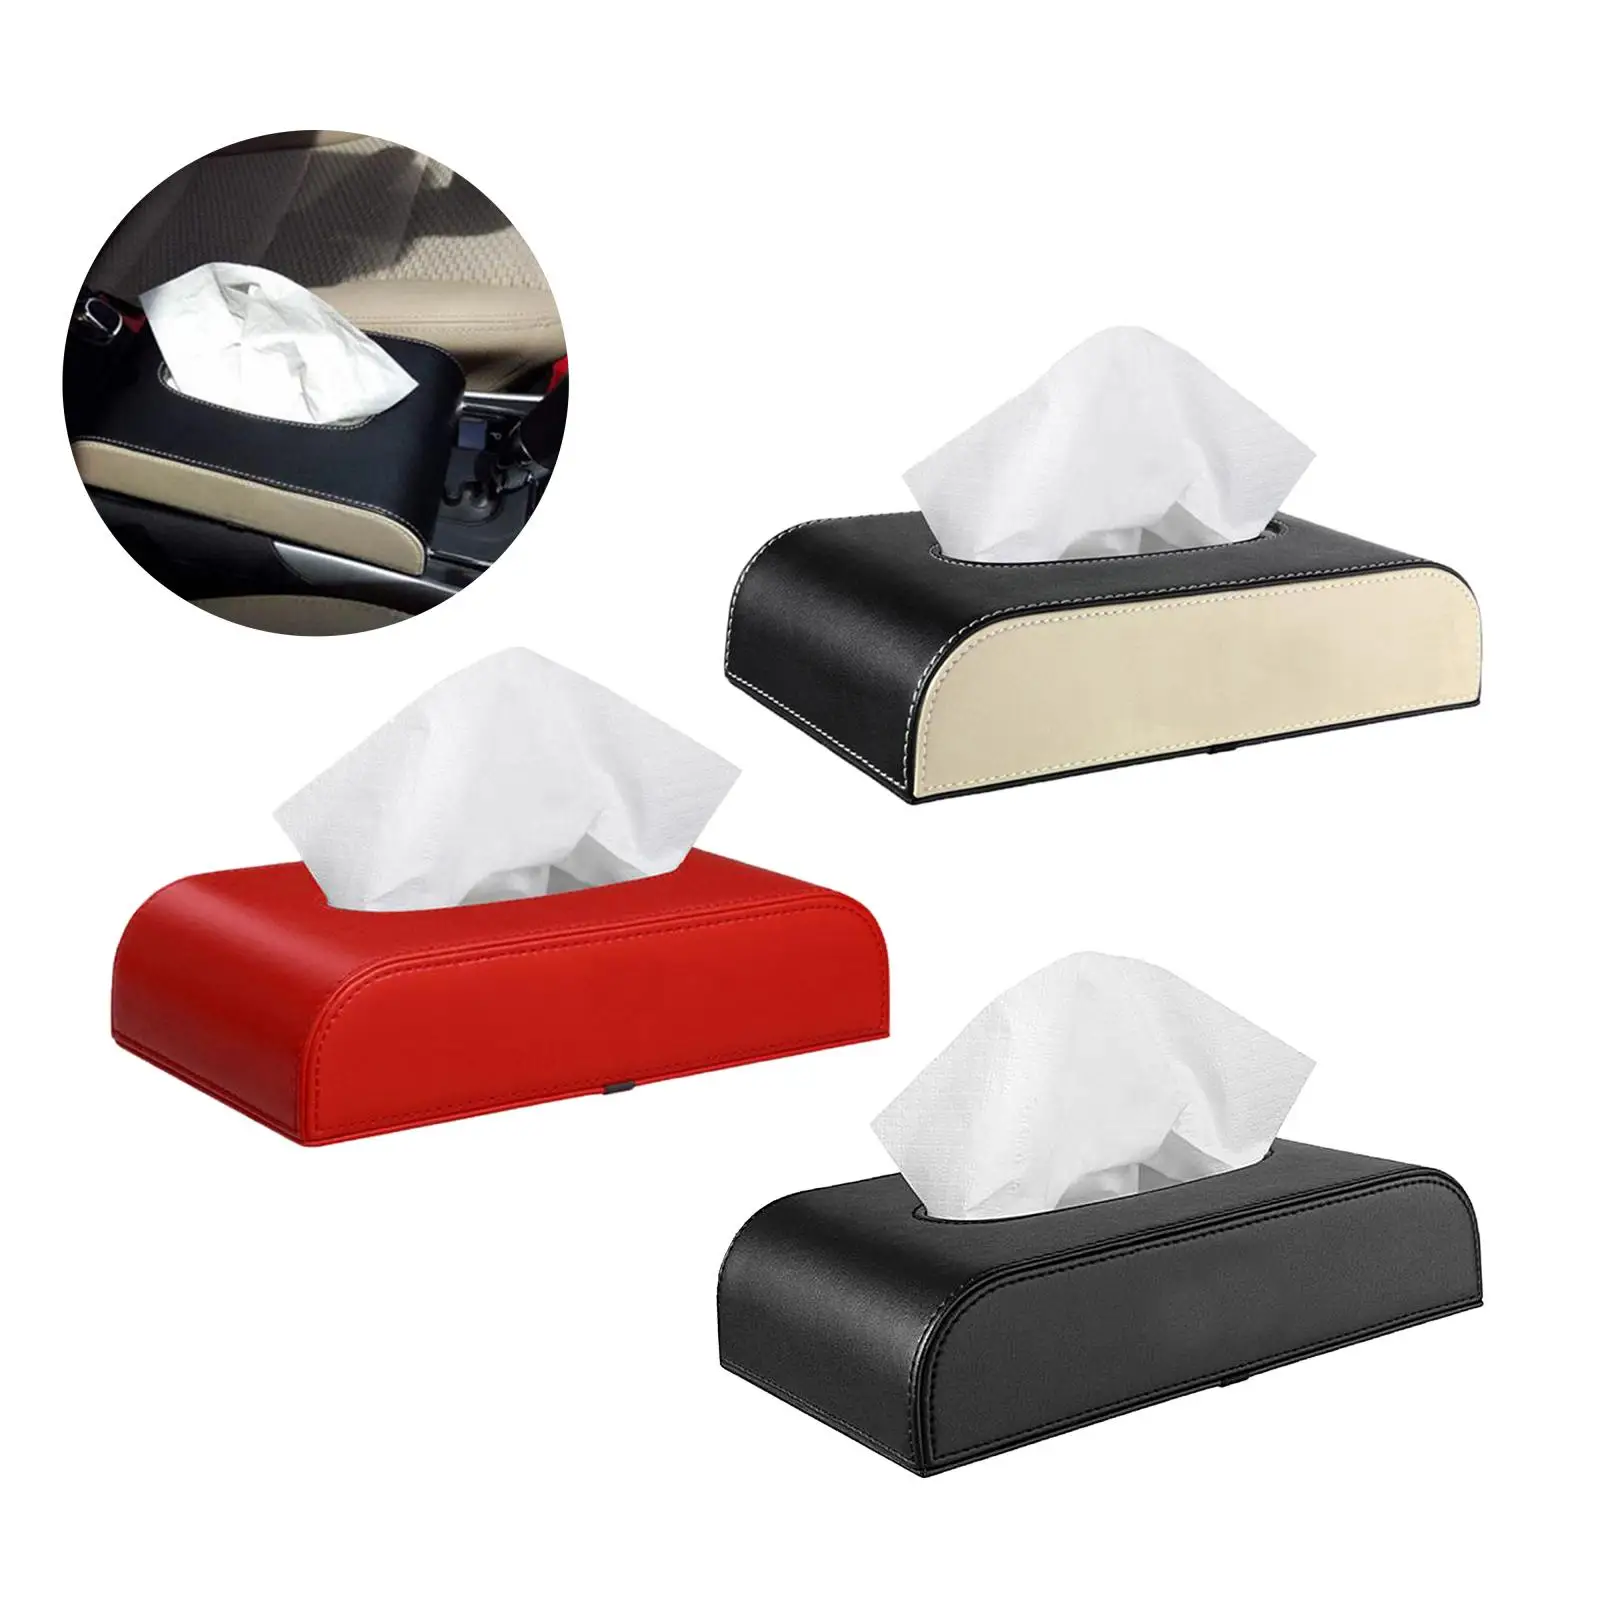 PU Leather Tissue Box  Holder Paper Storage for Decor Accessories